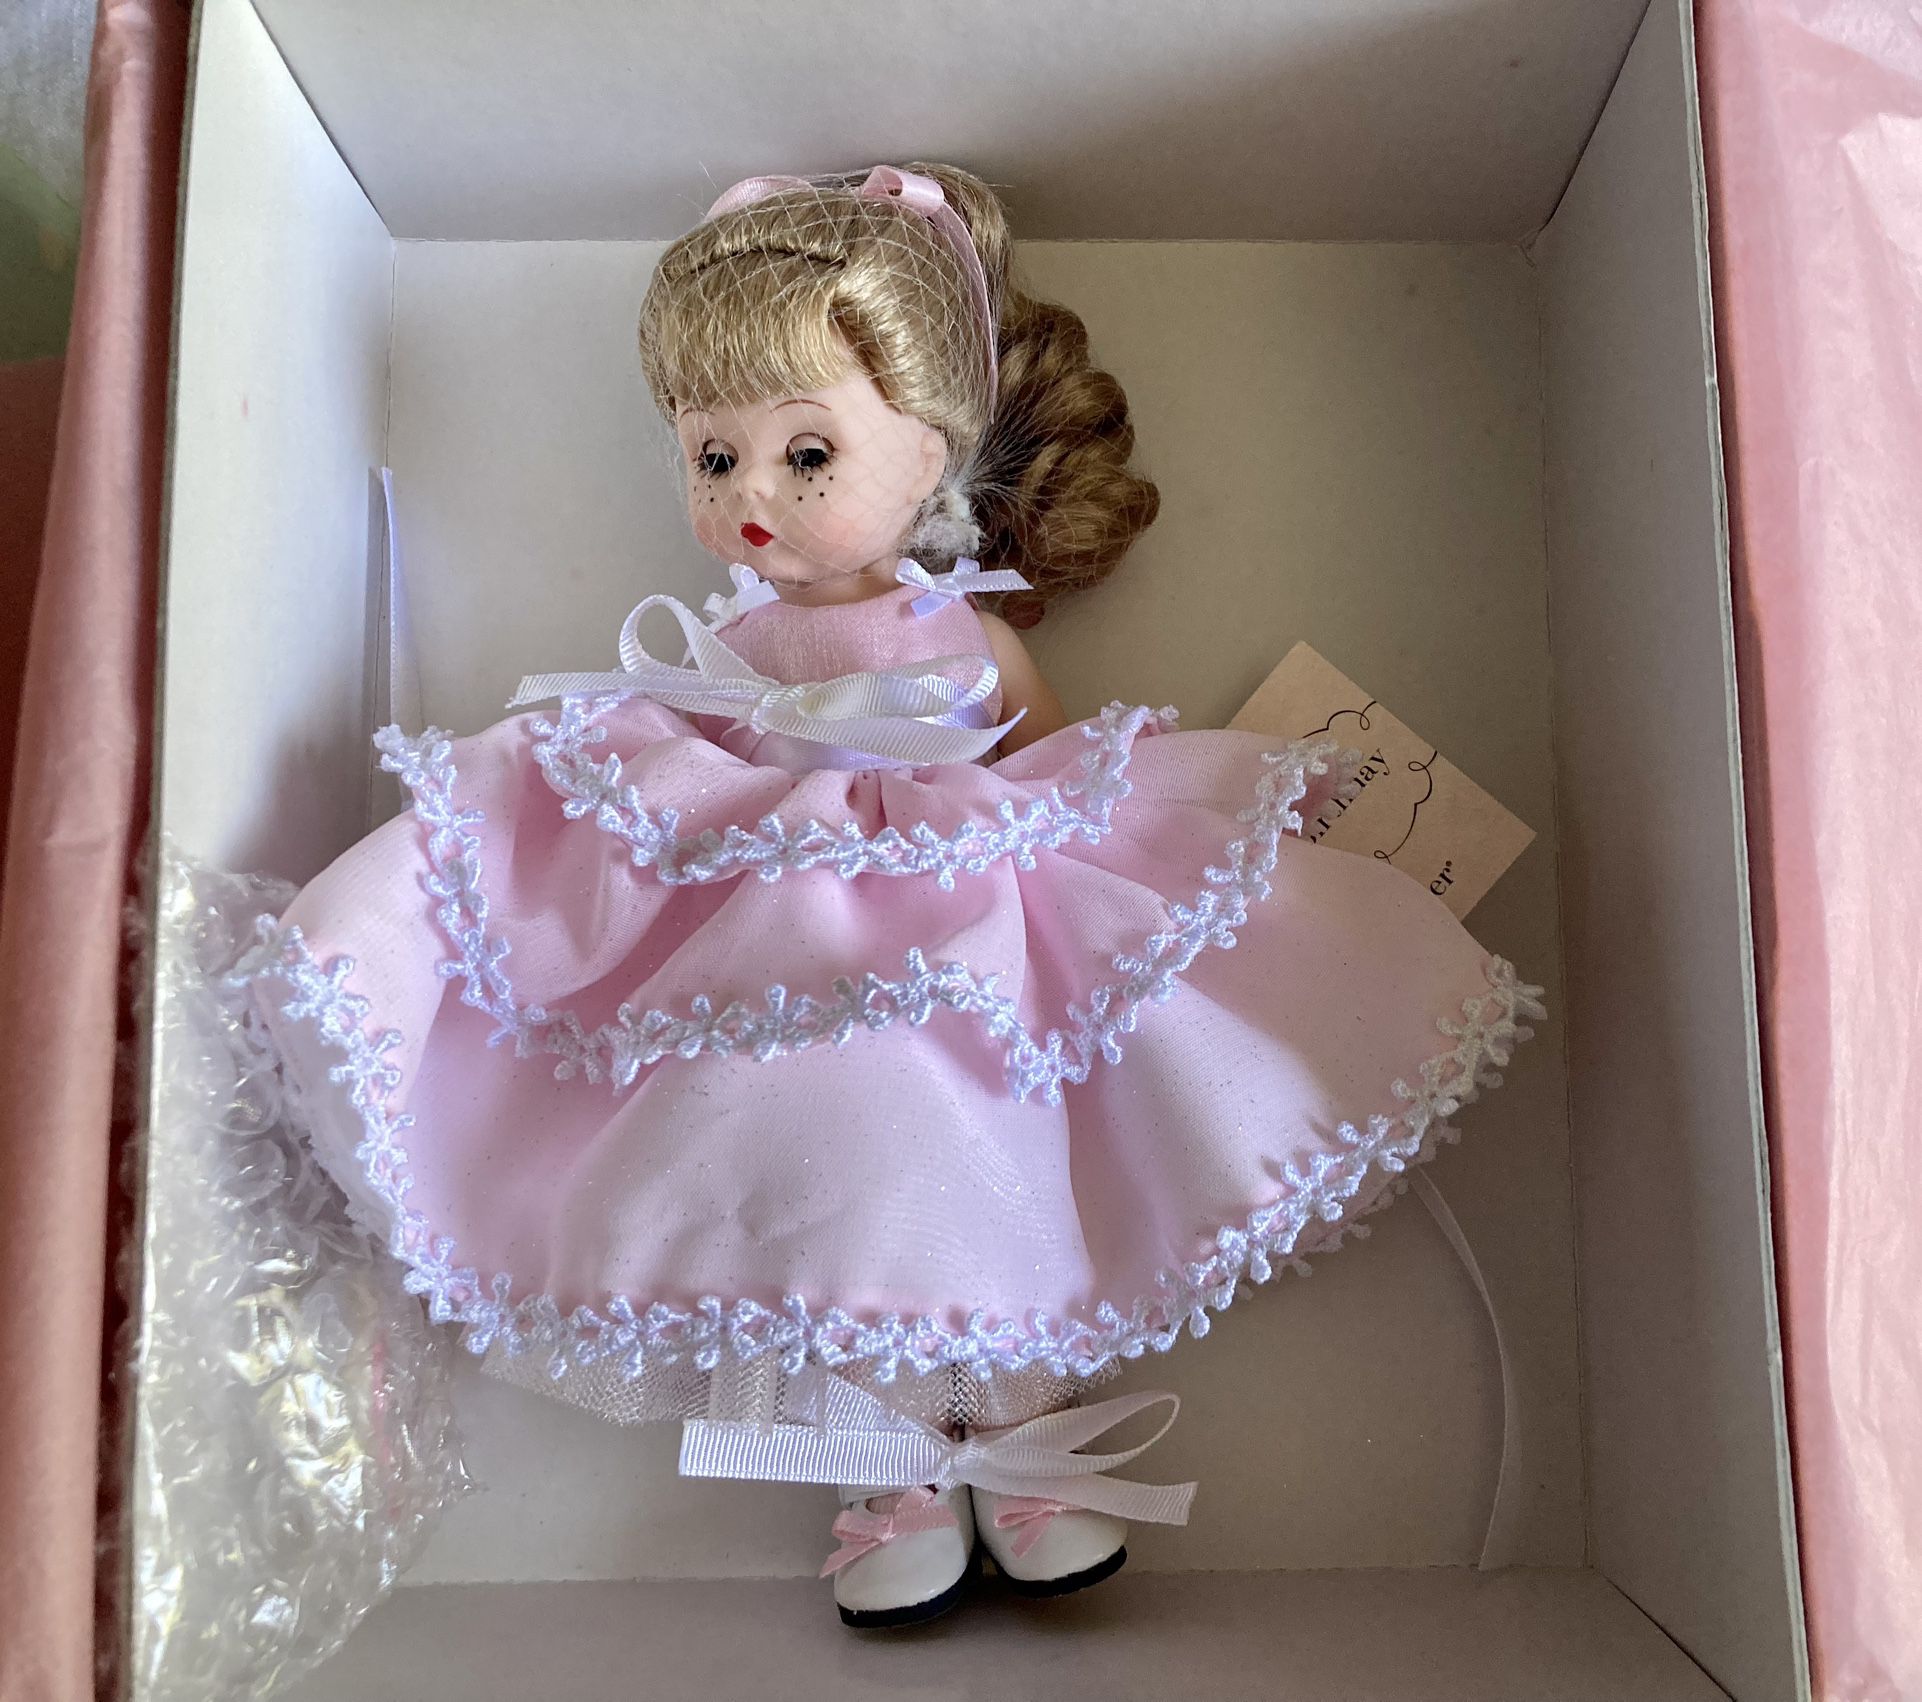 Collectible 8” Madam  Alexander Doll